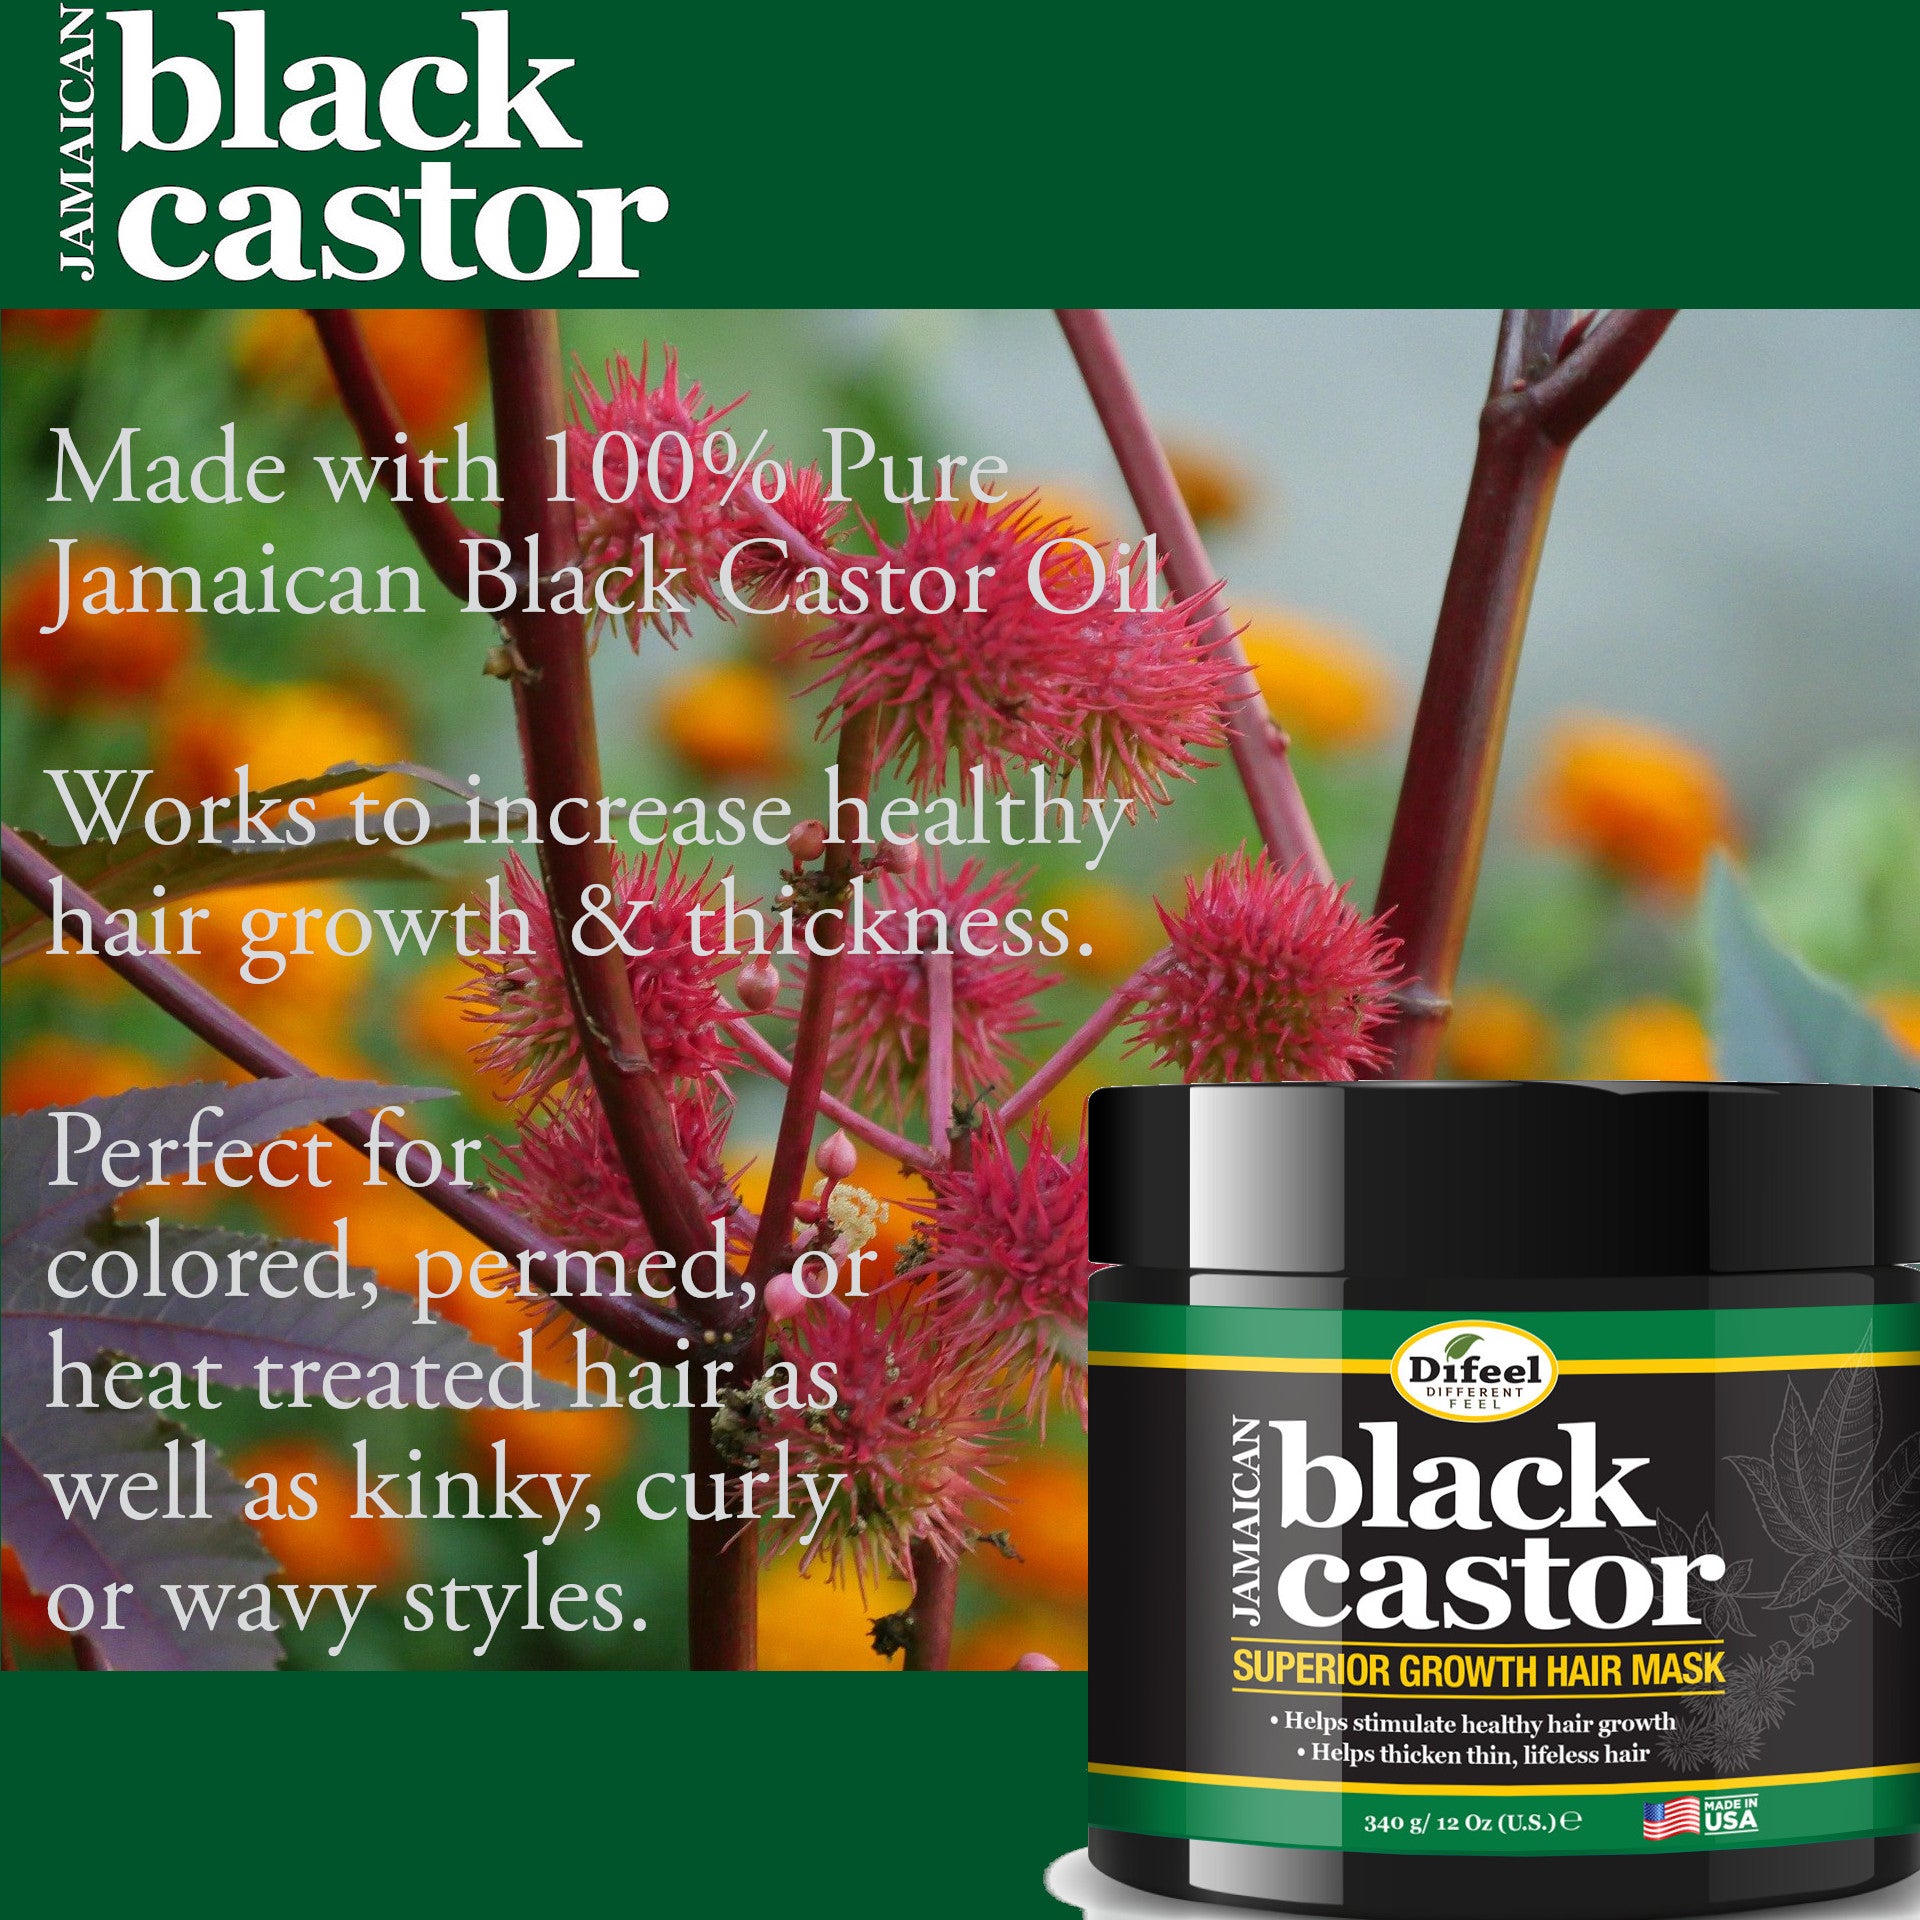 Difeel Superior Growth Jamaican Black Castor 4-PC Hair Treatment Set - Includes 12 oz. Shampoo, 12 oz. Hair Mask , 2.5 oz. Root Stimulator & 2.5 oz. Hair Oil